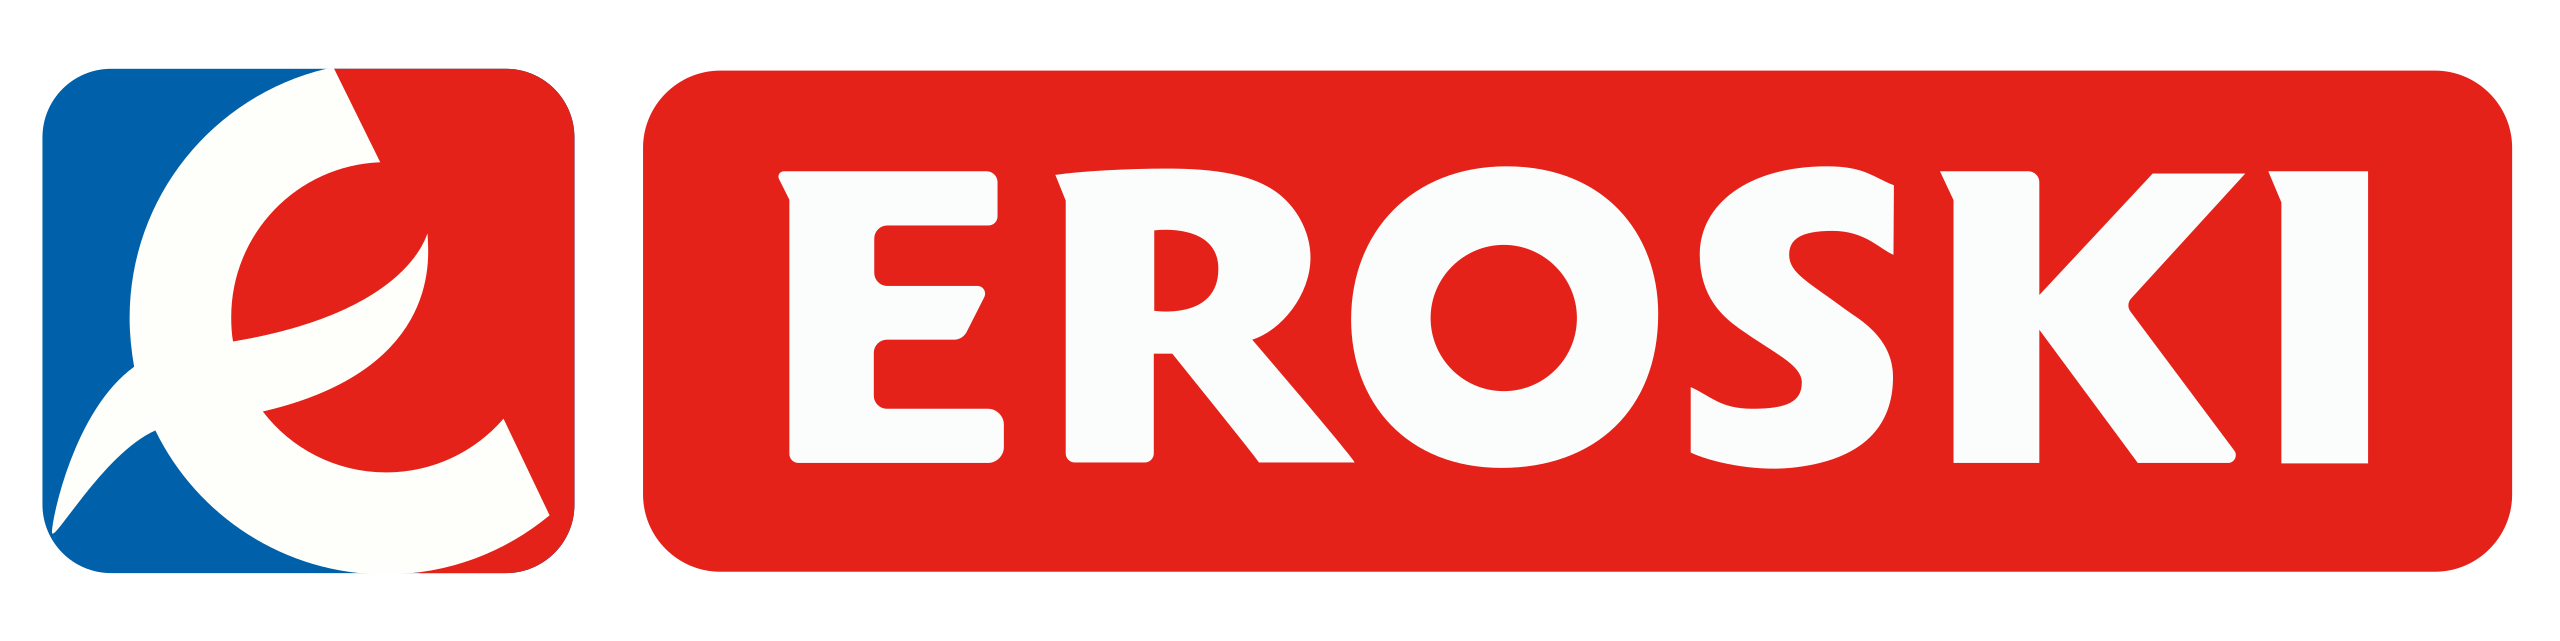 eroski-logo